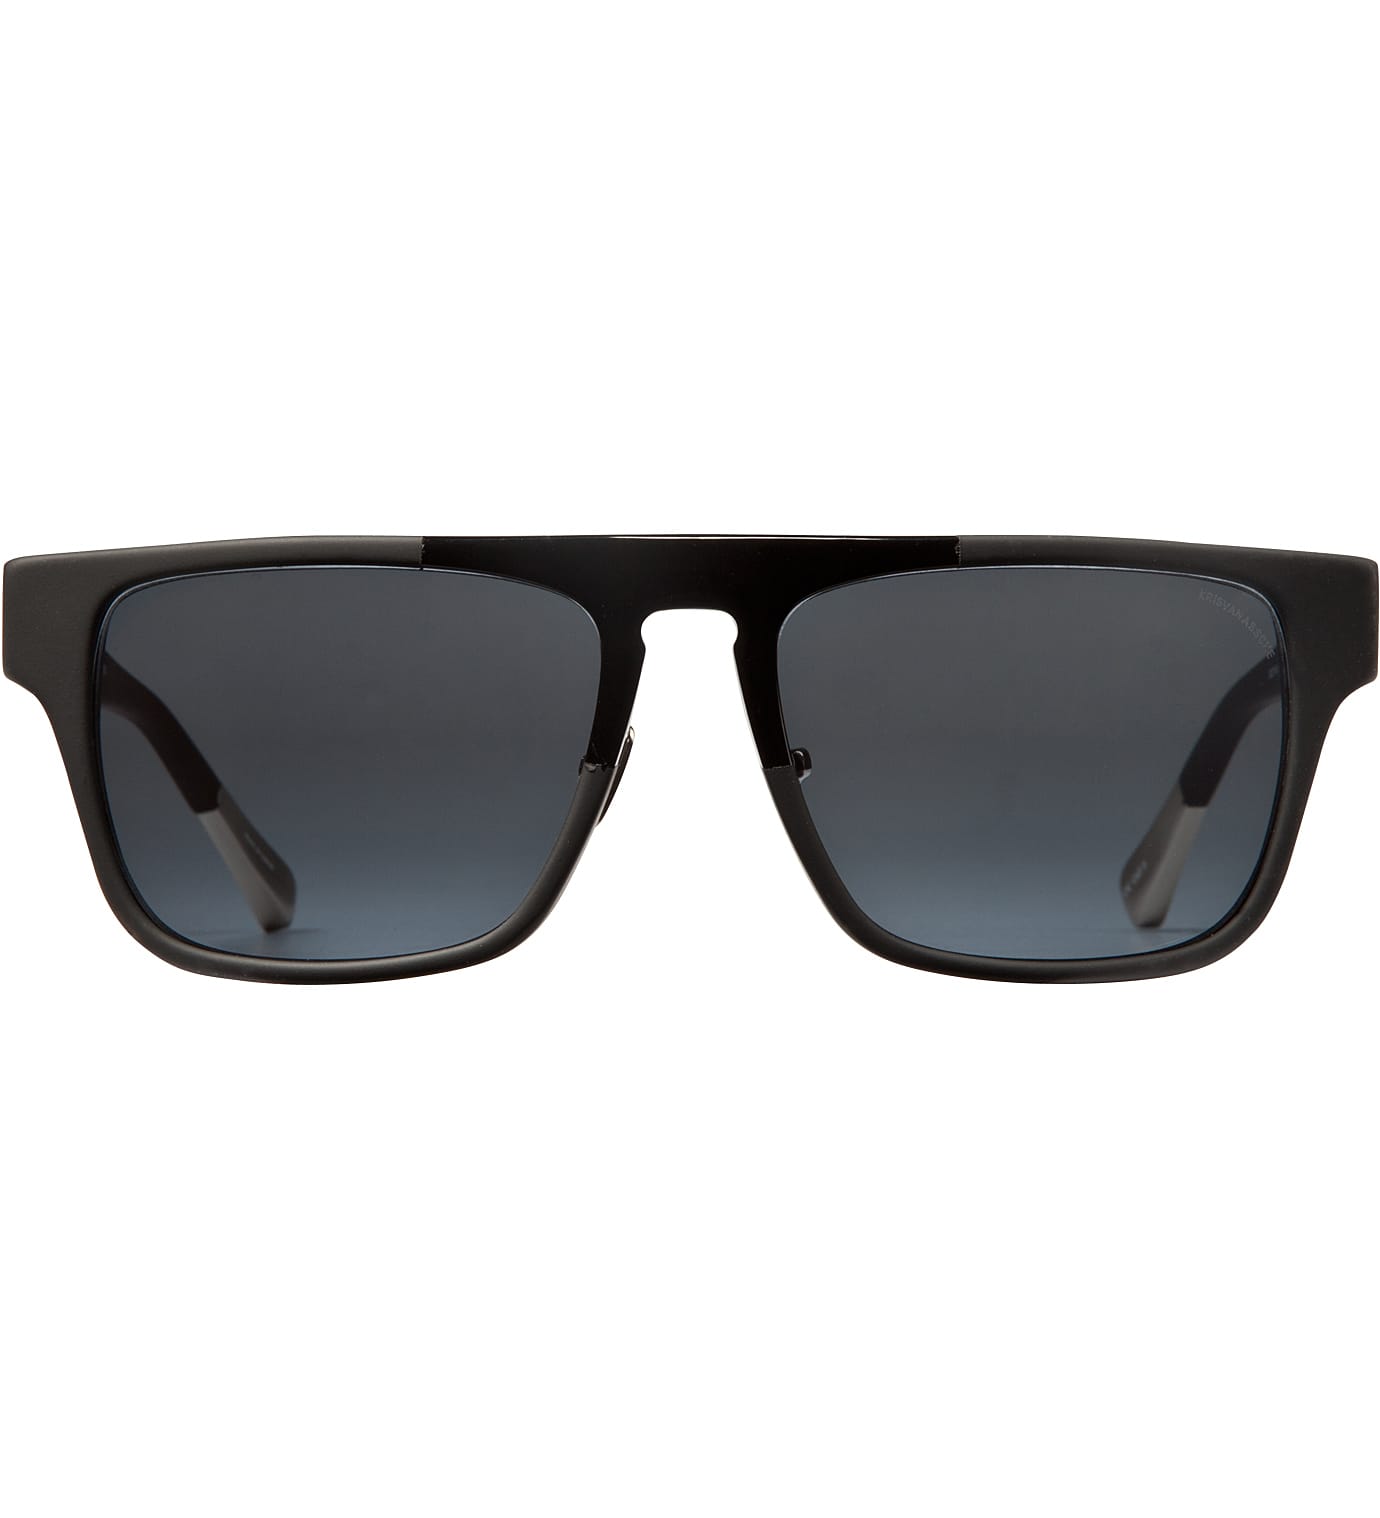 Kris Van Assche Linda Farrow Collaborations Brown /Clear Sunglasses | eBay